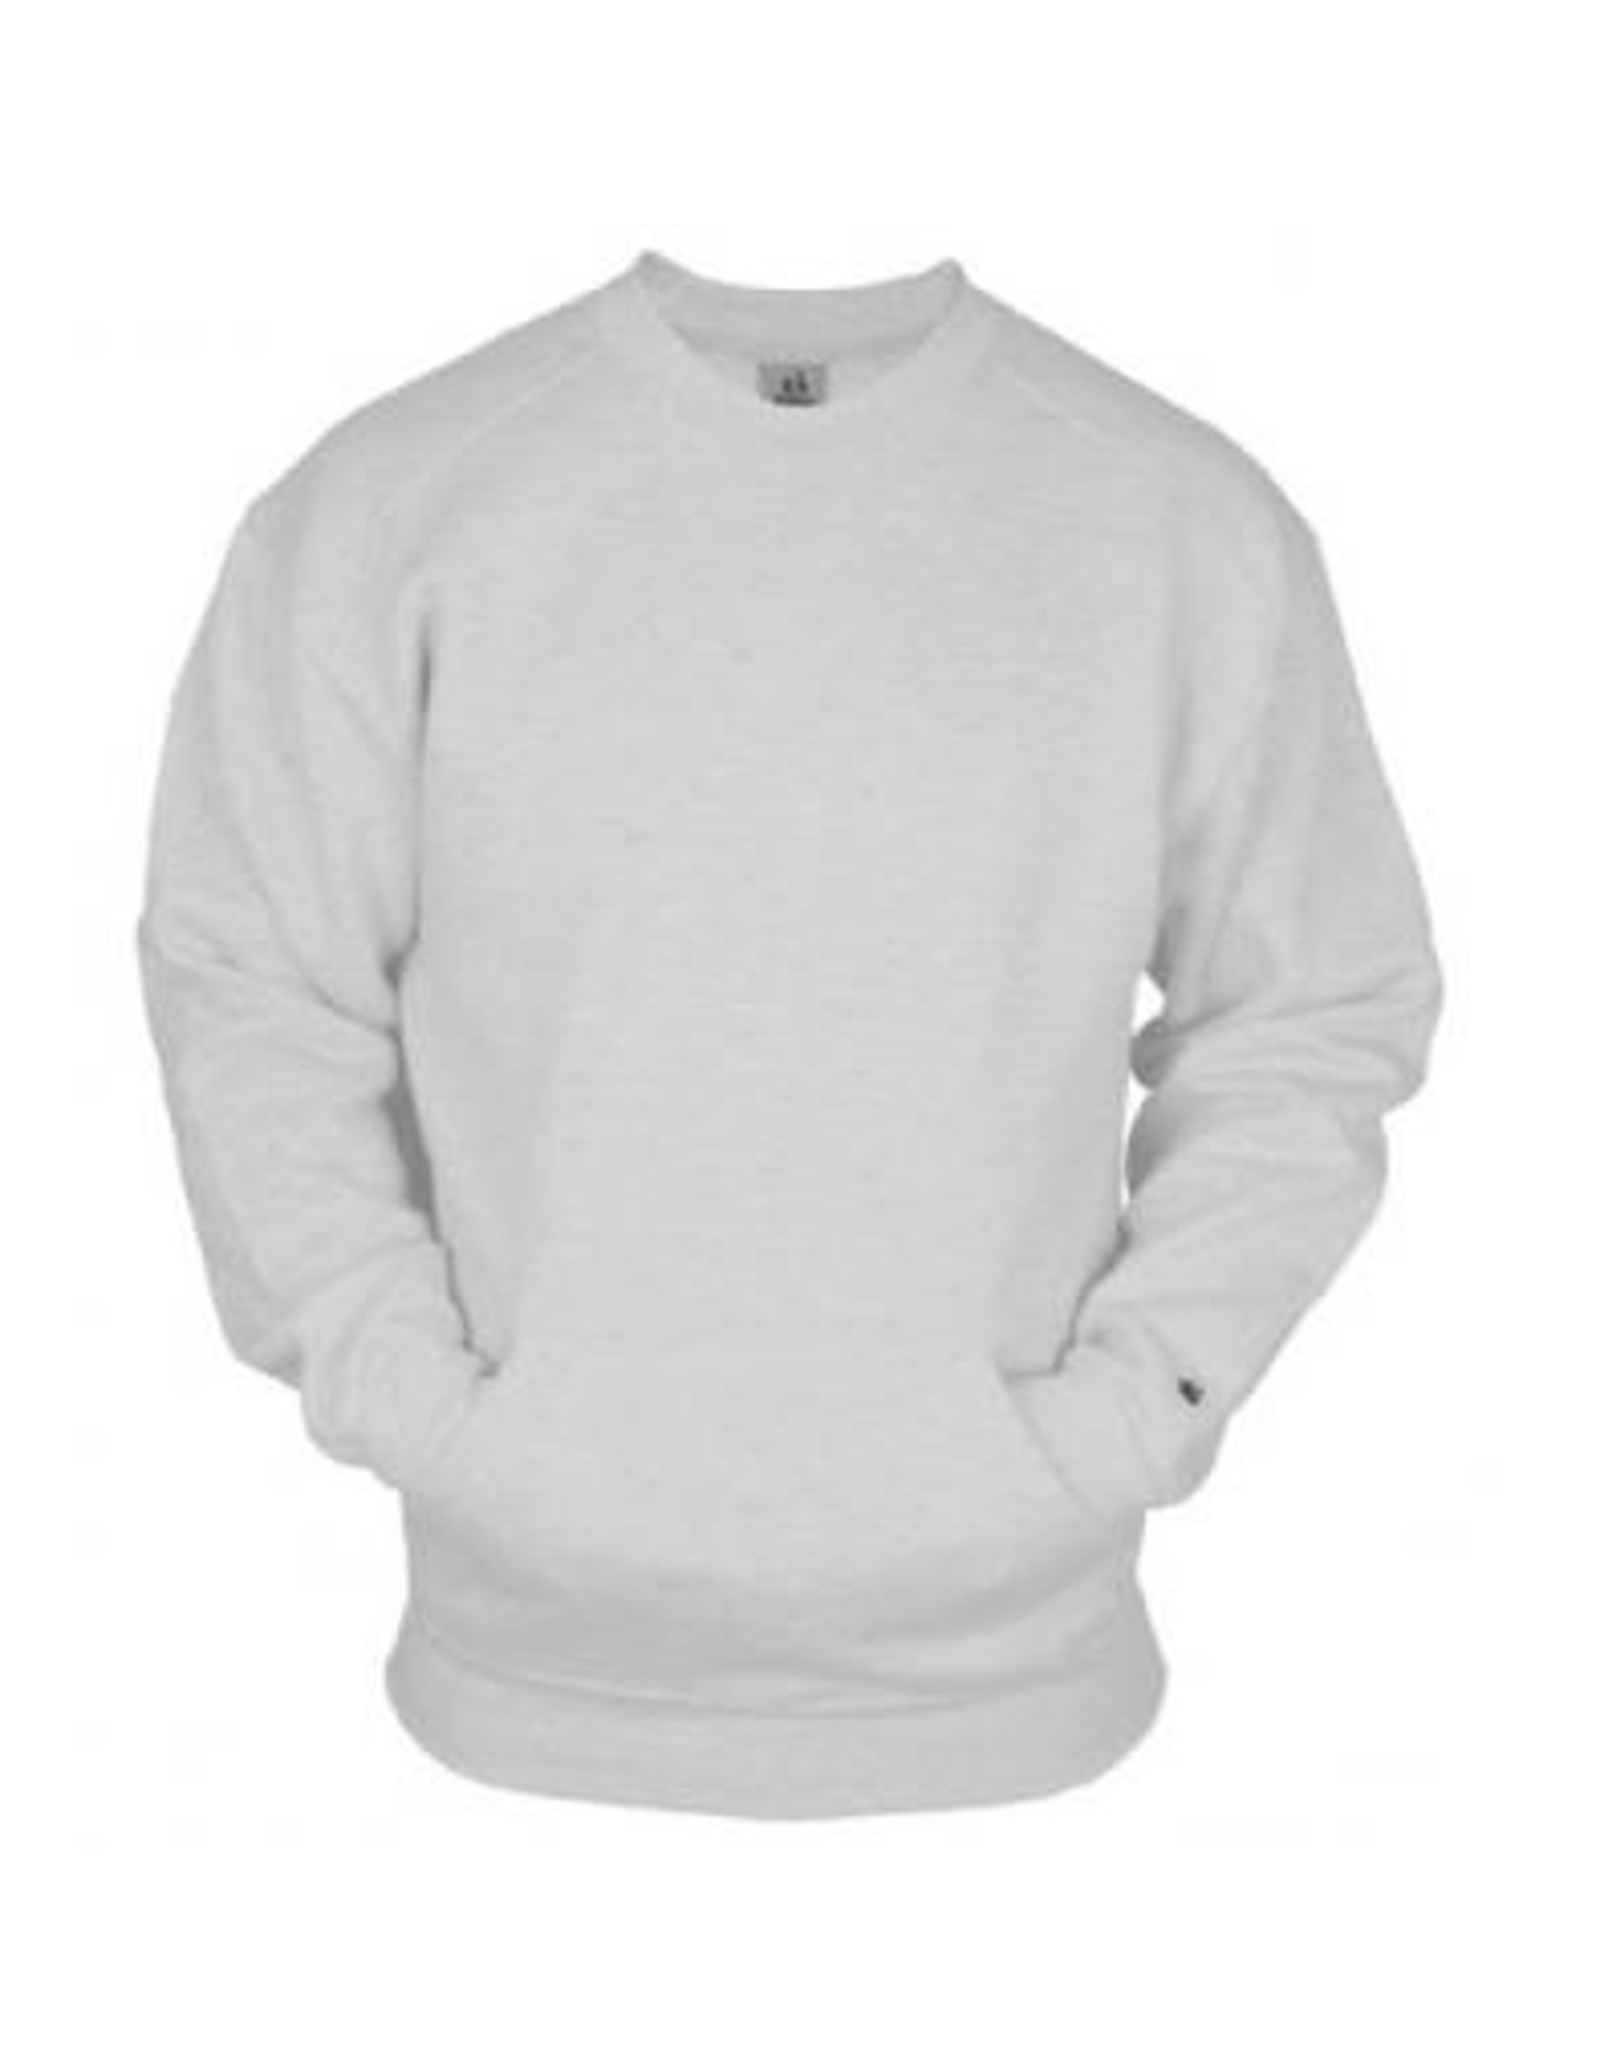 NON-UNIFORM Sweatshirt - JD Volleyball Pullover Sweatshirt